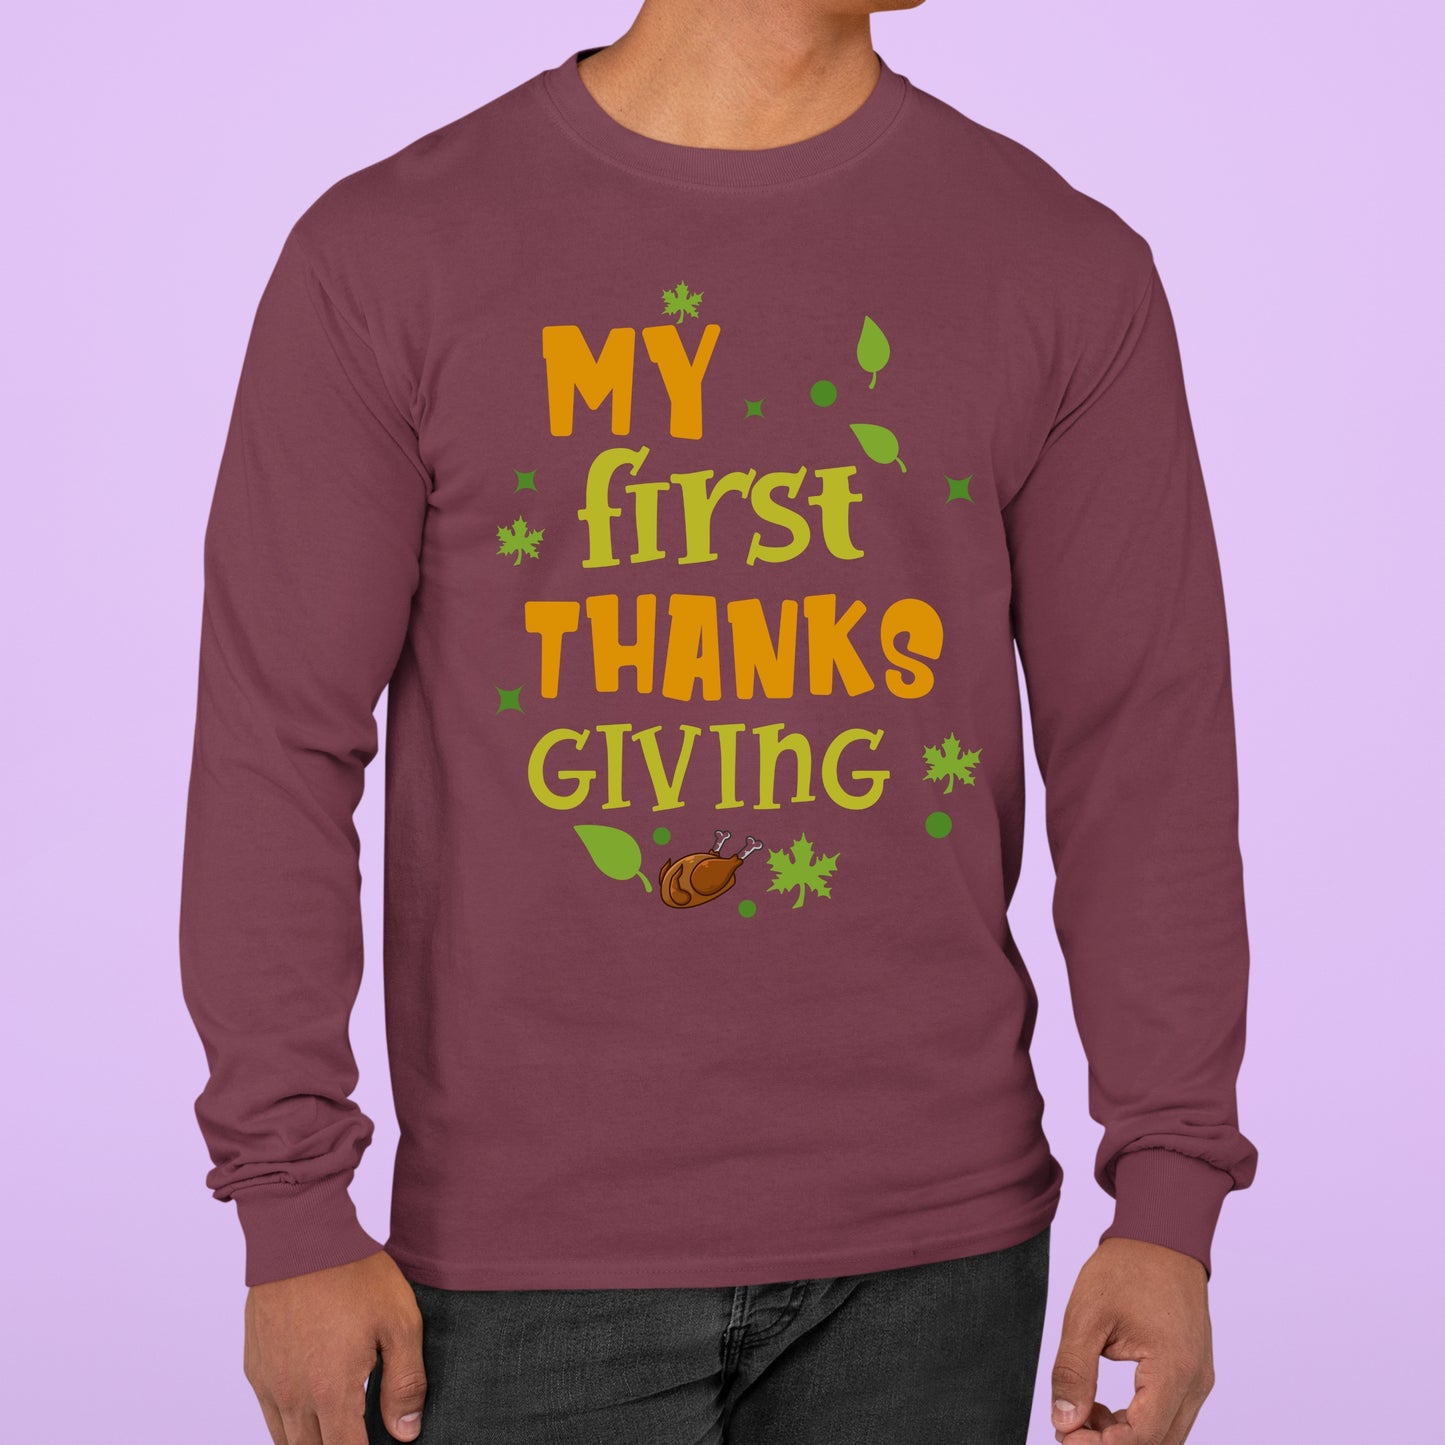 First Thanksgiving Sweatshirt, Thanksgiving Sweatshirt, Thanksgiving Sweater for Men, Thanksgiving Sweater for Women, Thanksgiving Gift Idea